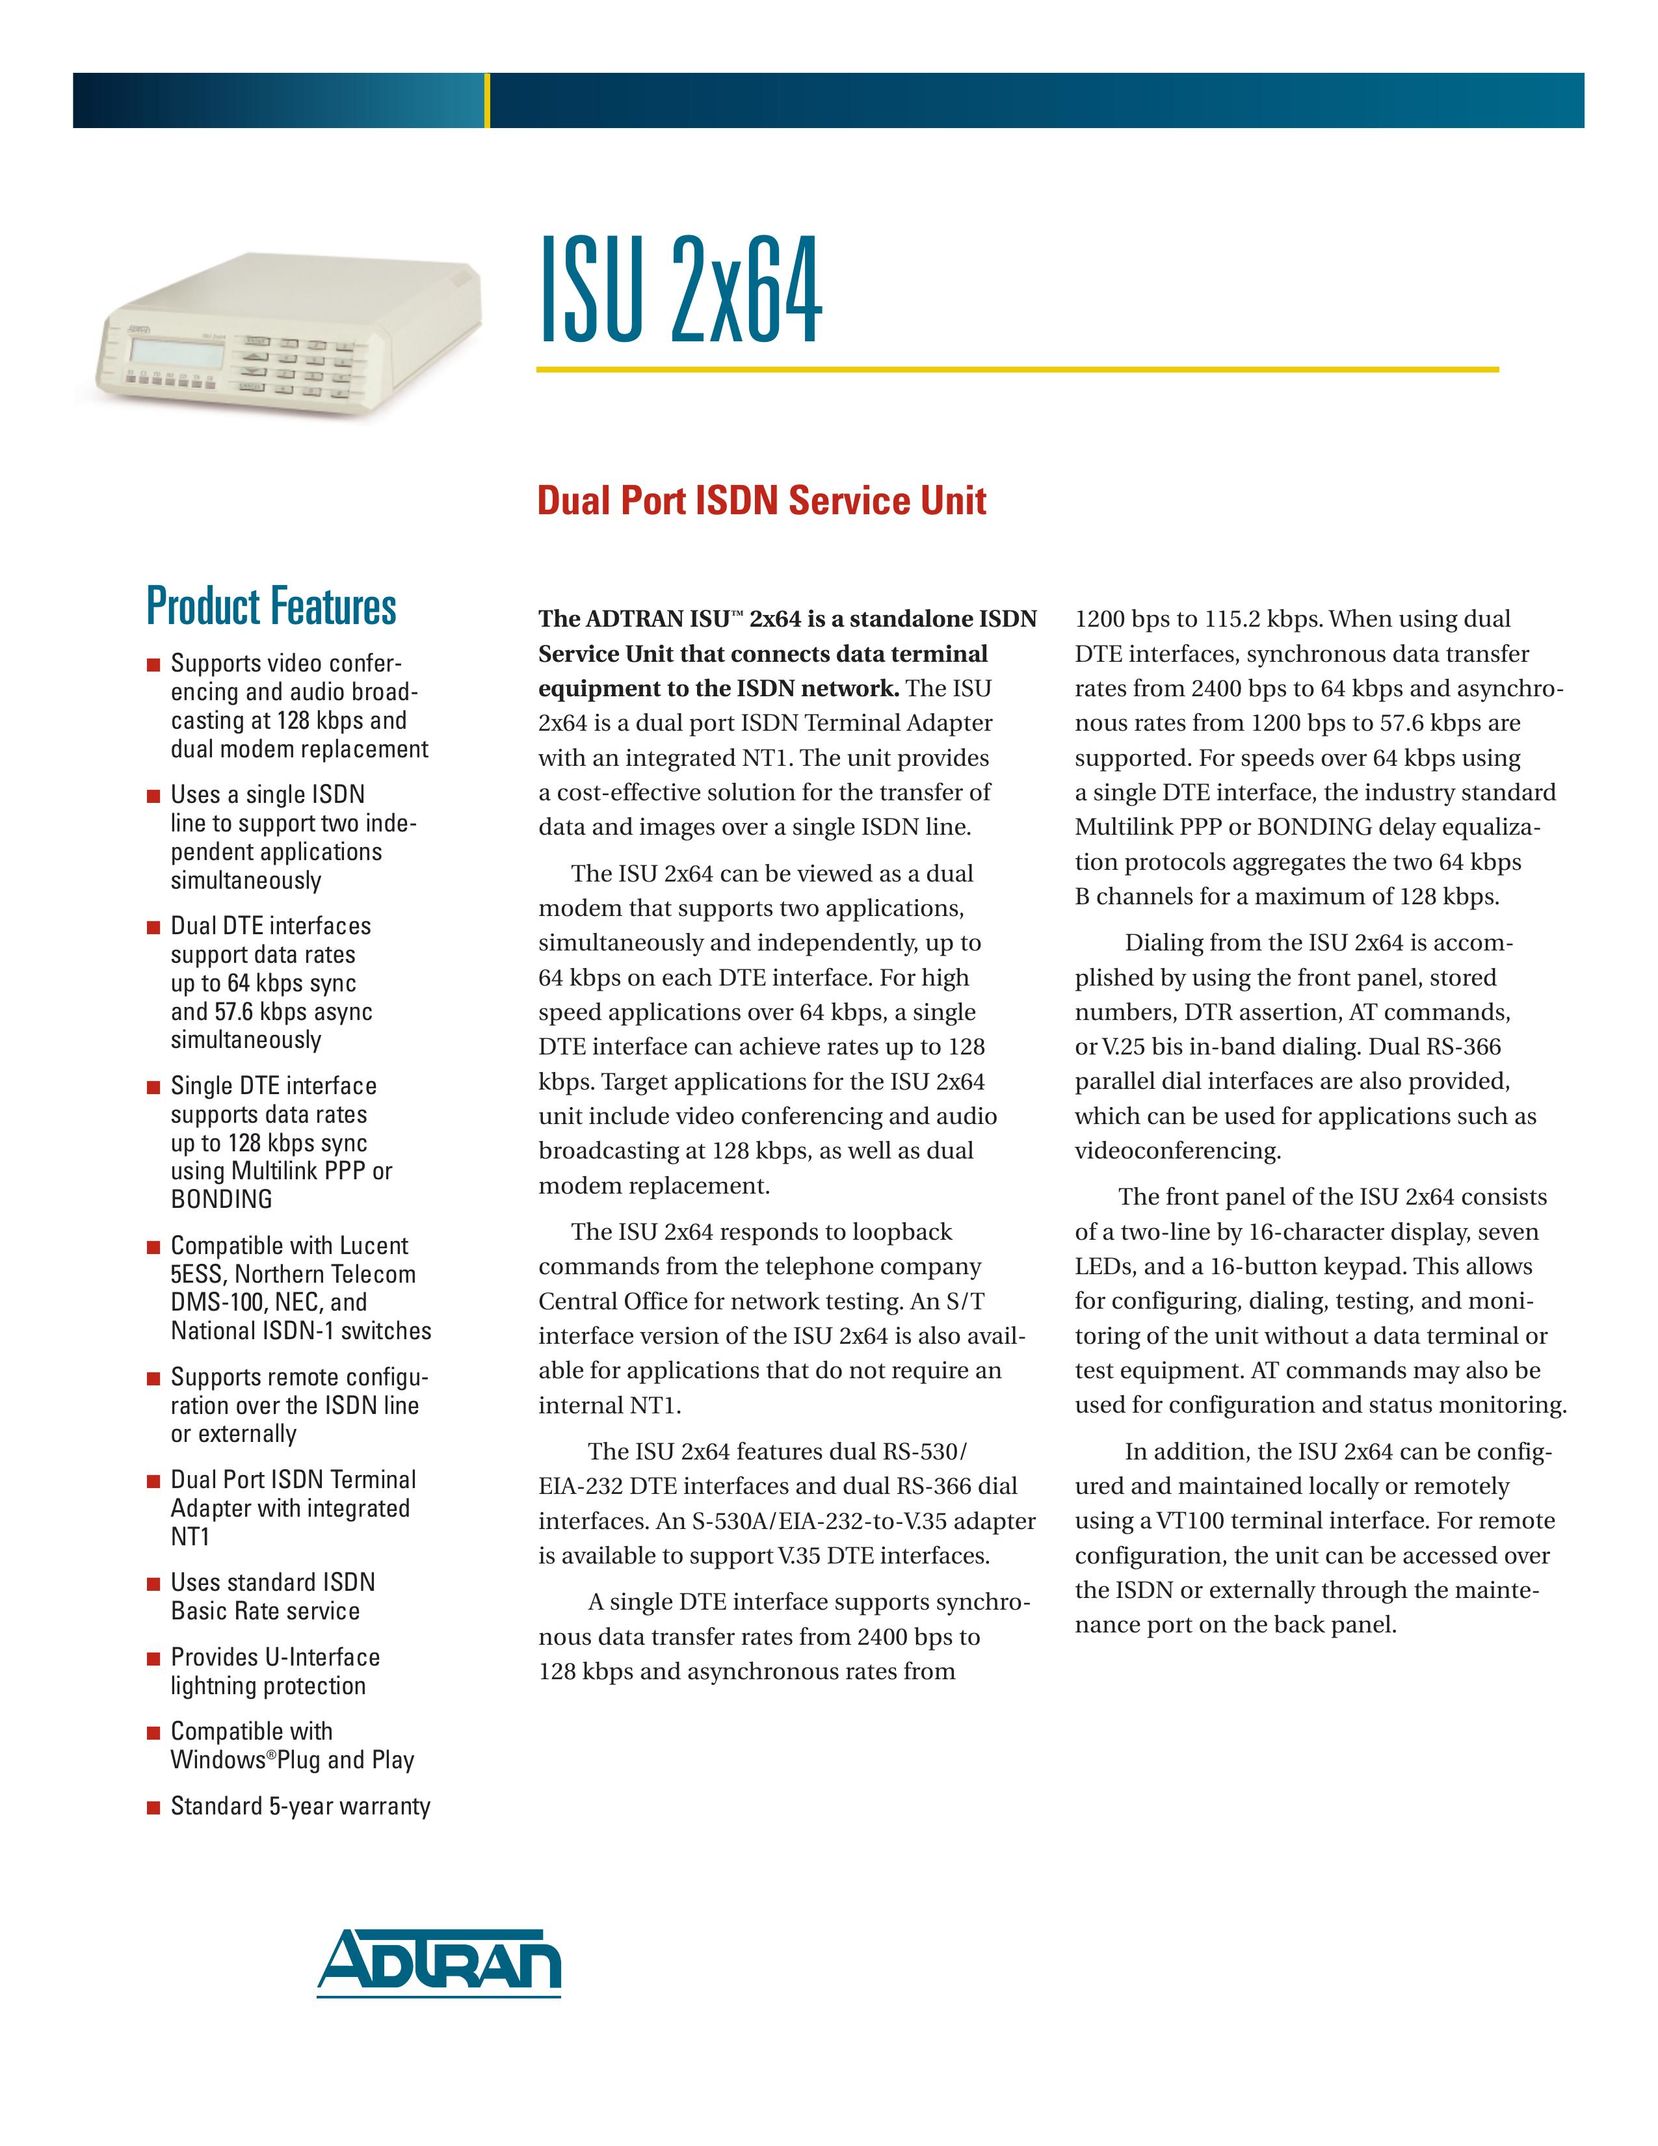 ADTRAN ISU 2X64 Conference Phone User Manual (Page 1)